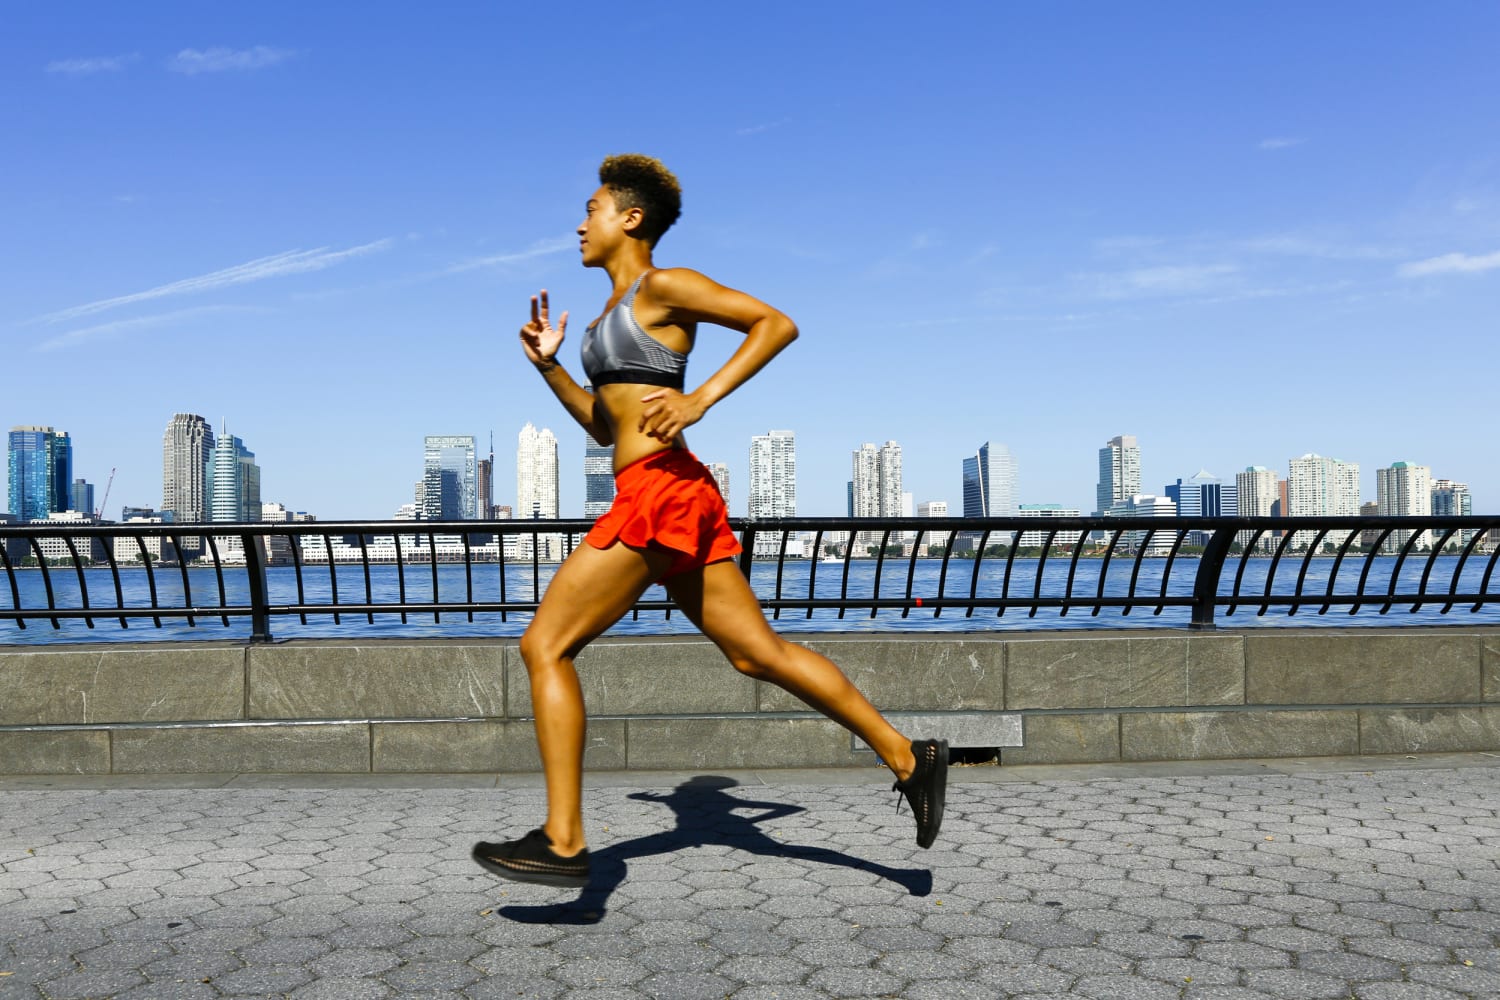 6 best running shorts for women in 2021